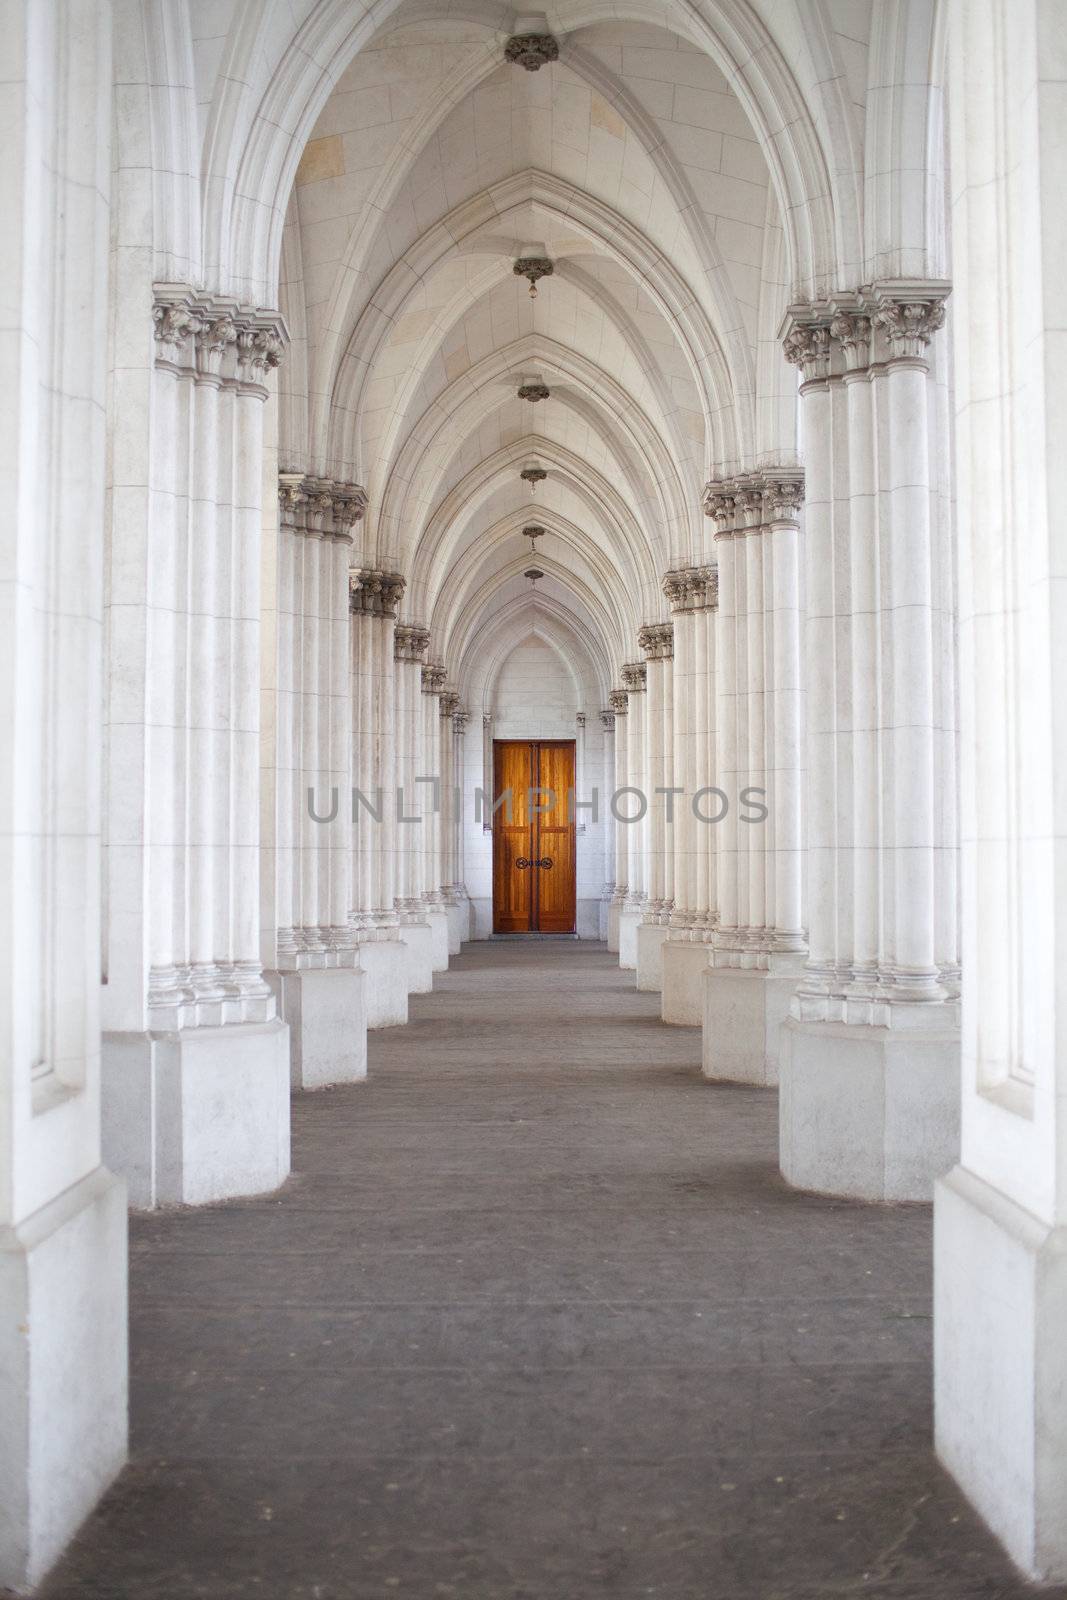 corridor of columns in the church